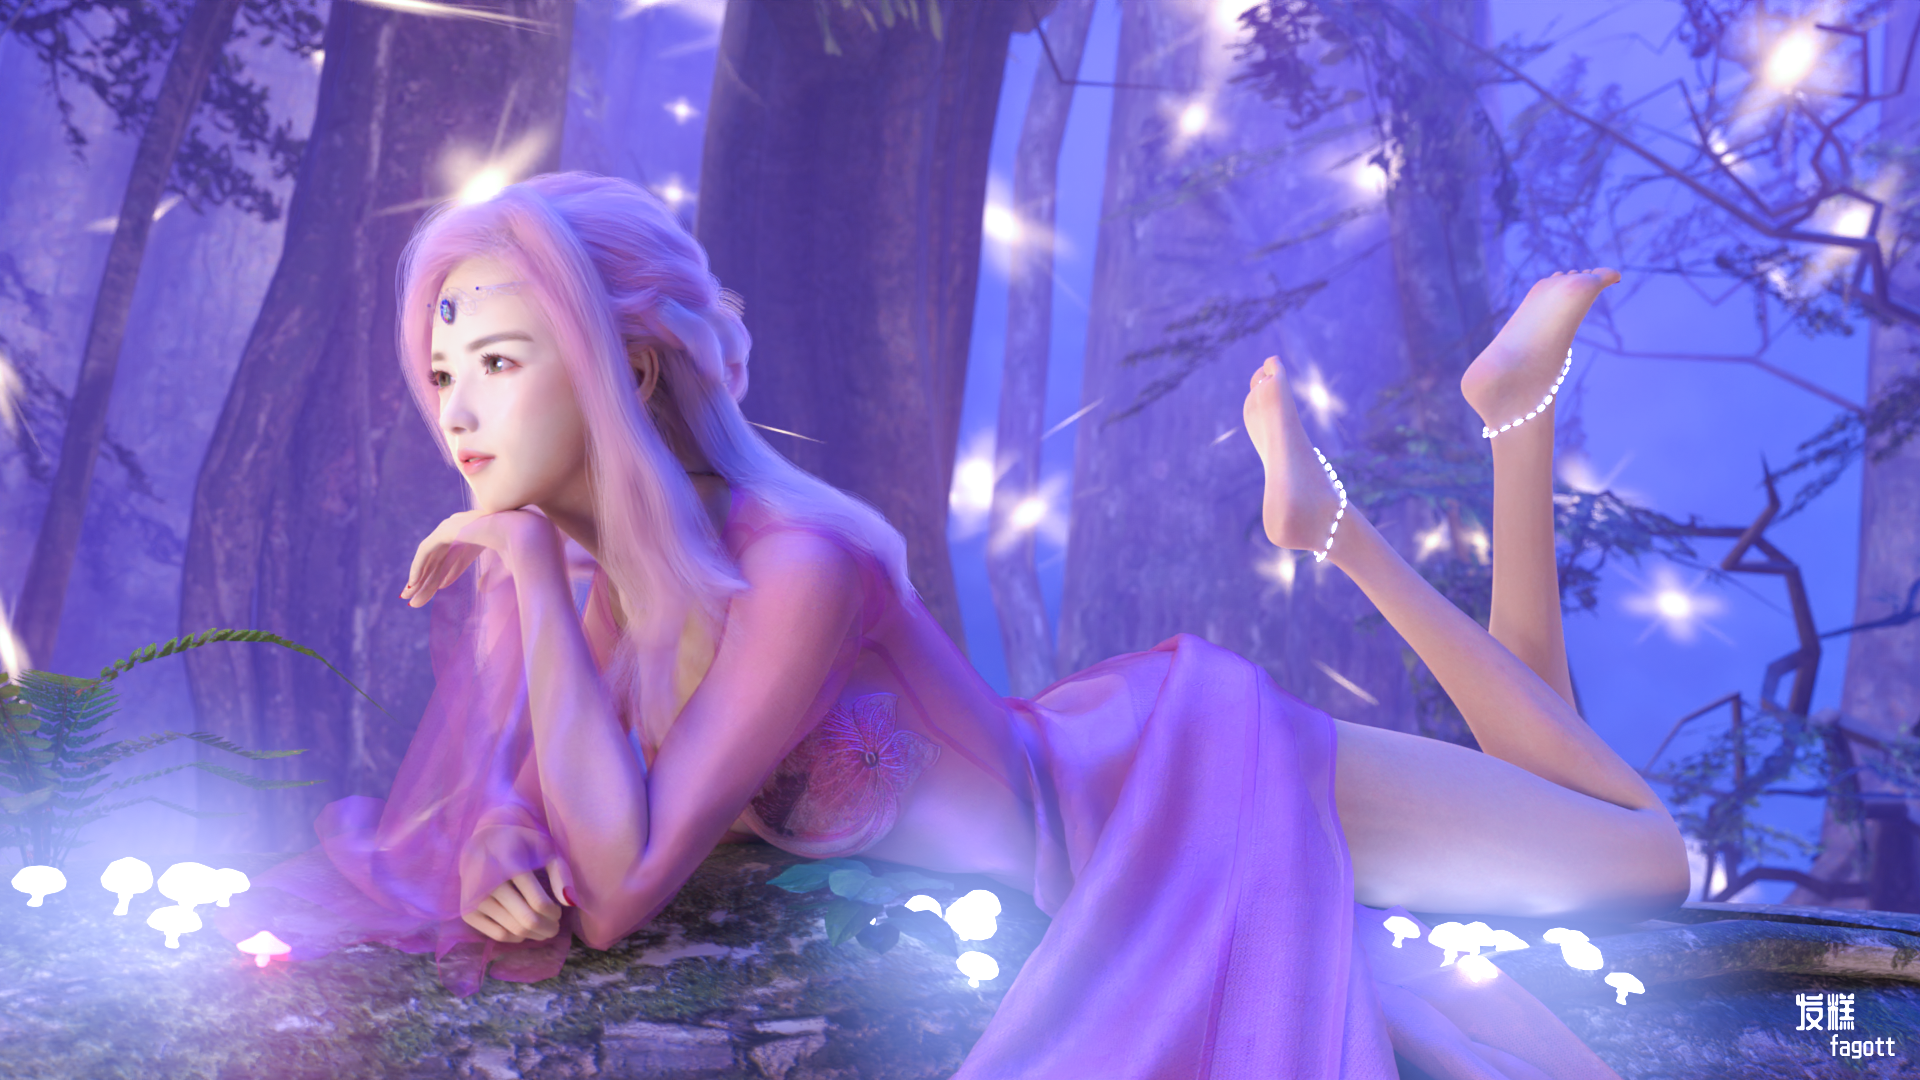 General 1920x1080 fantasy girl dress barefoot lights forest original characters artwork CGI digital art